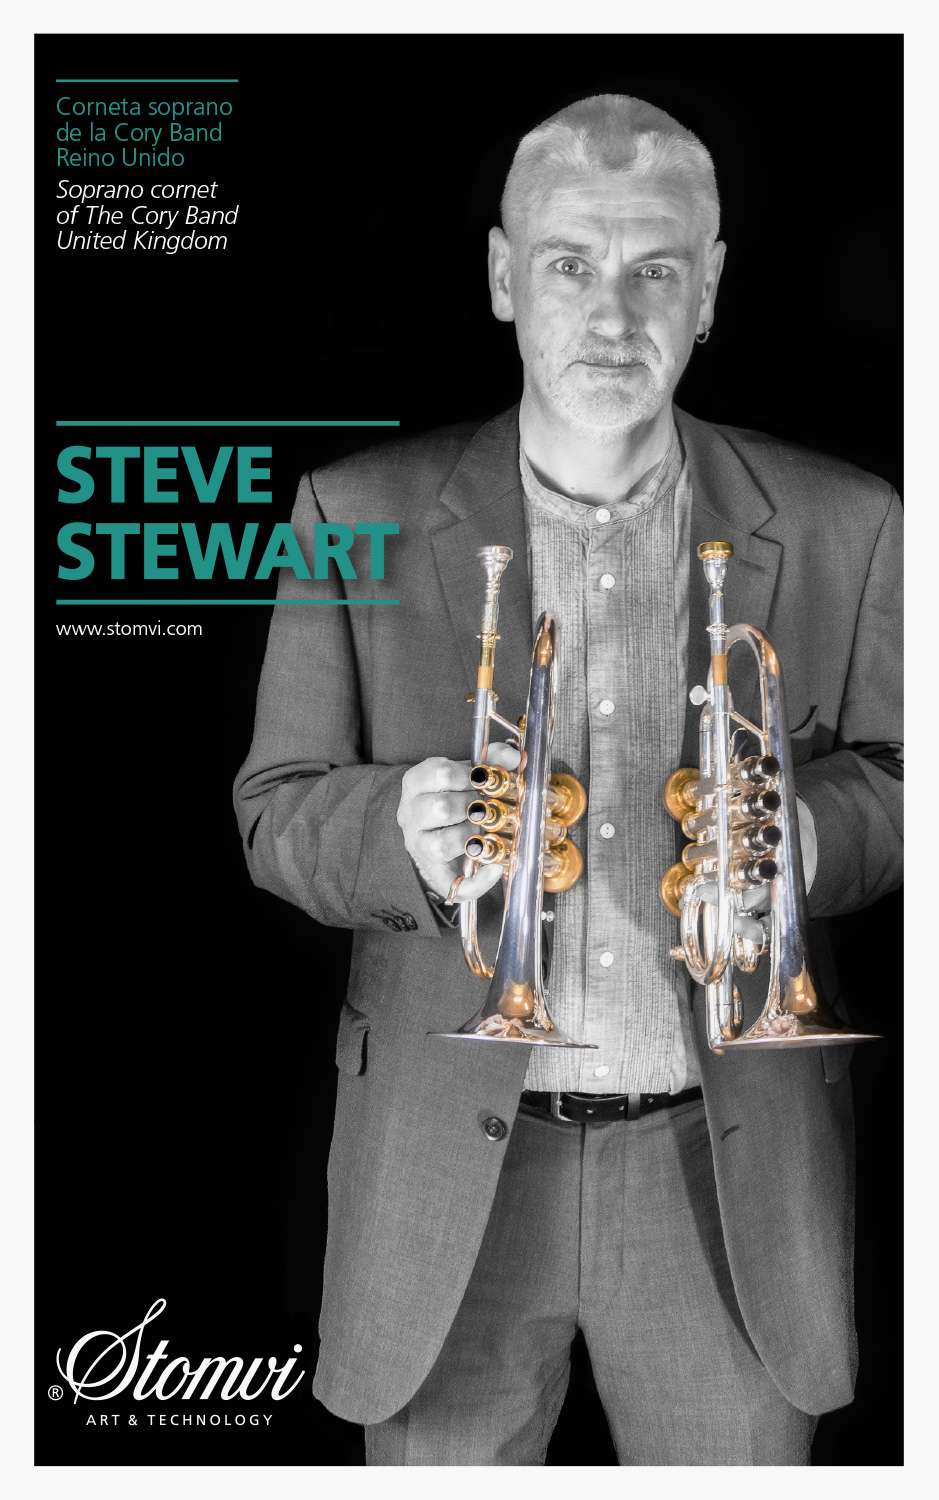 Steve Stewart